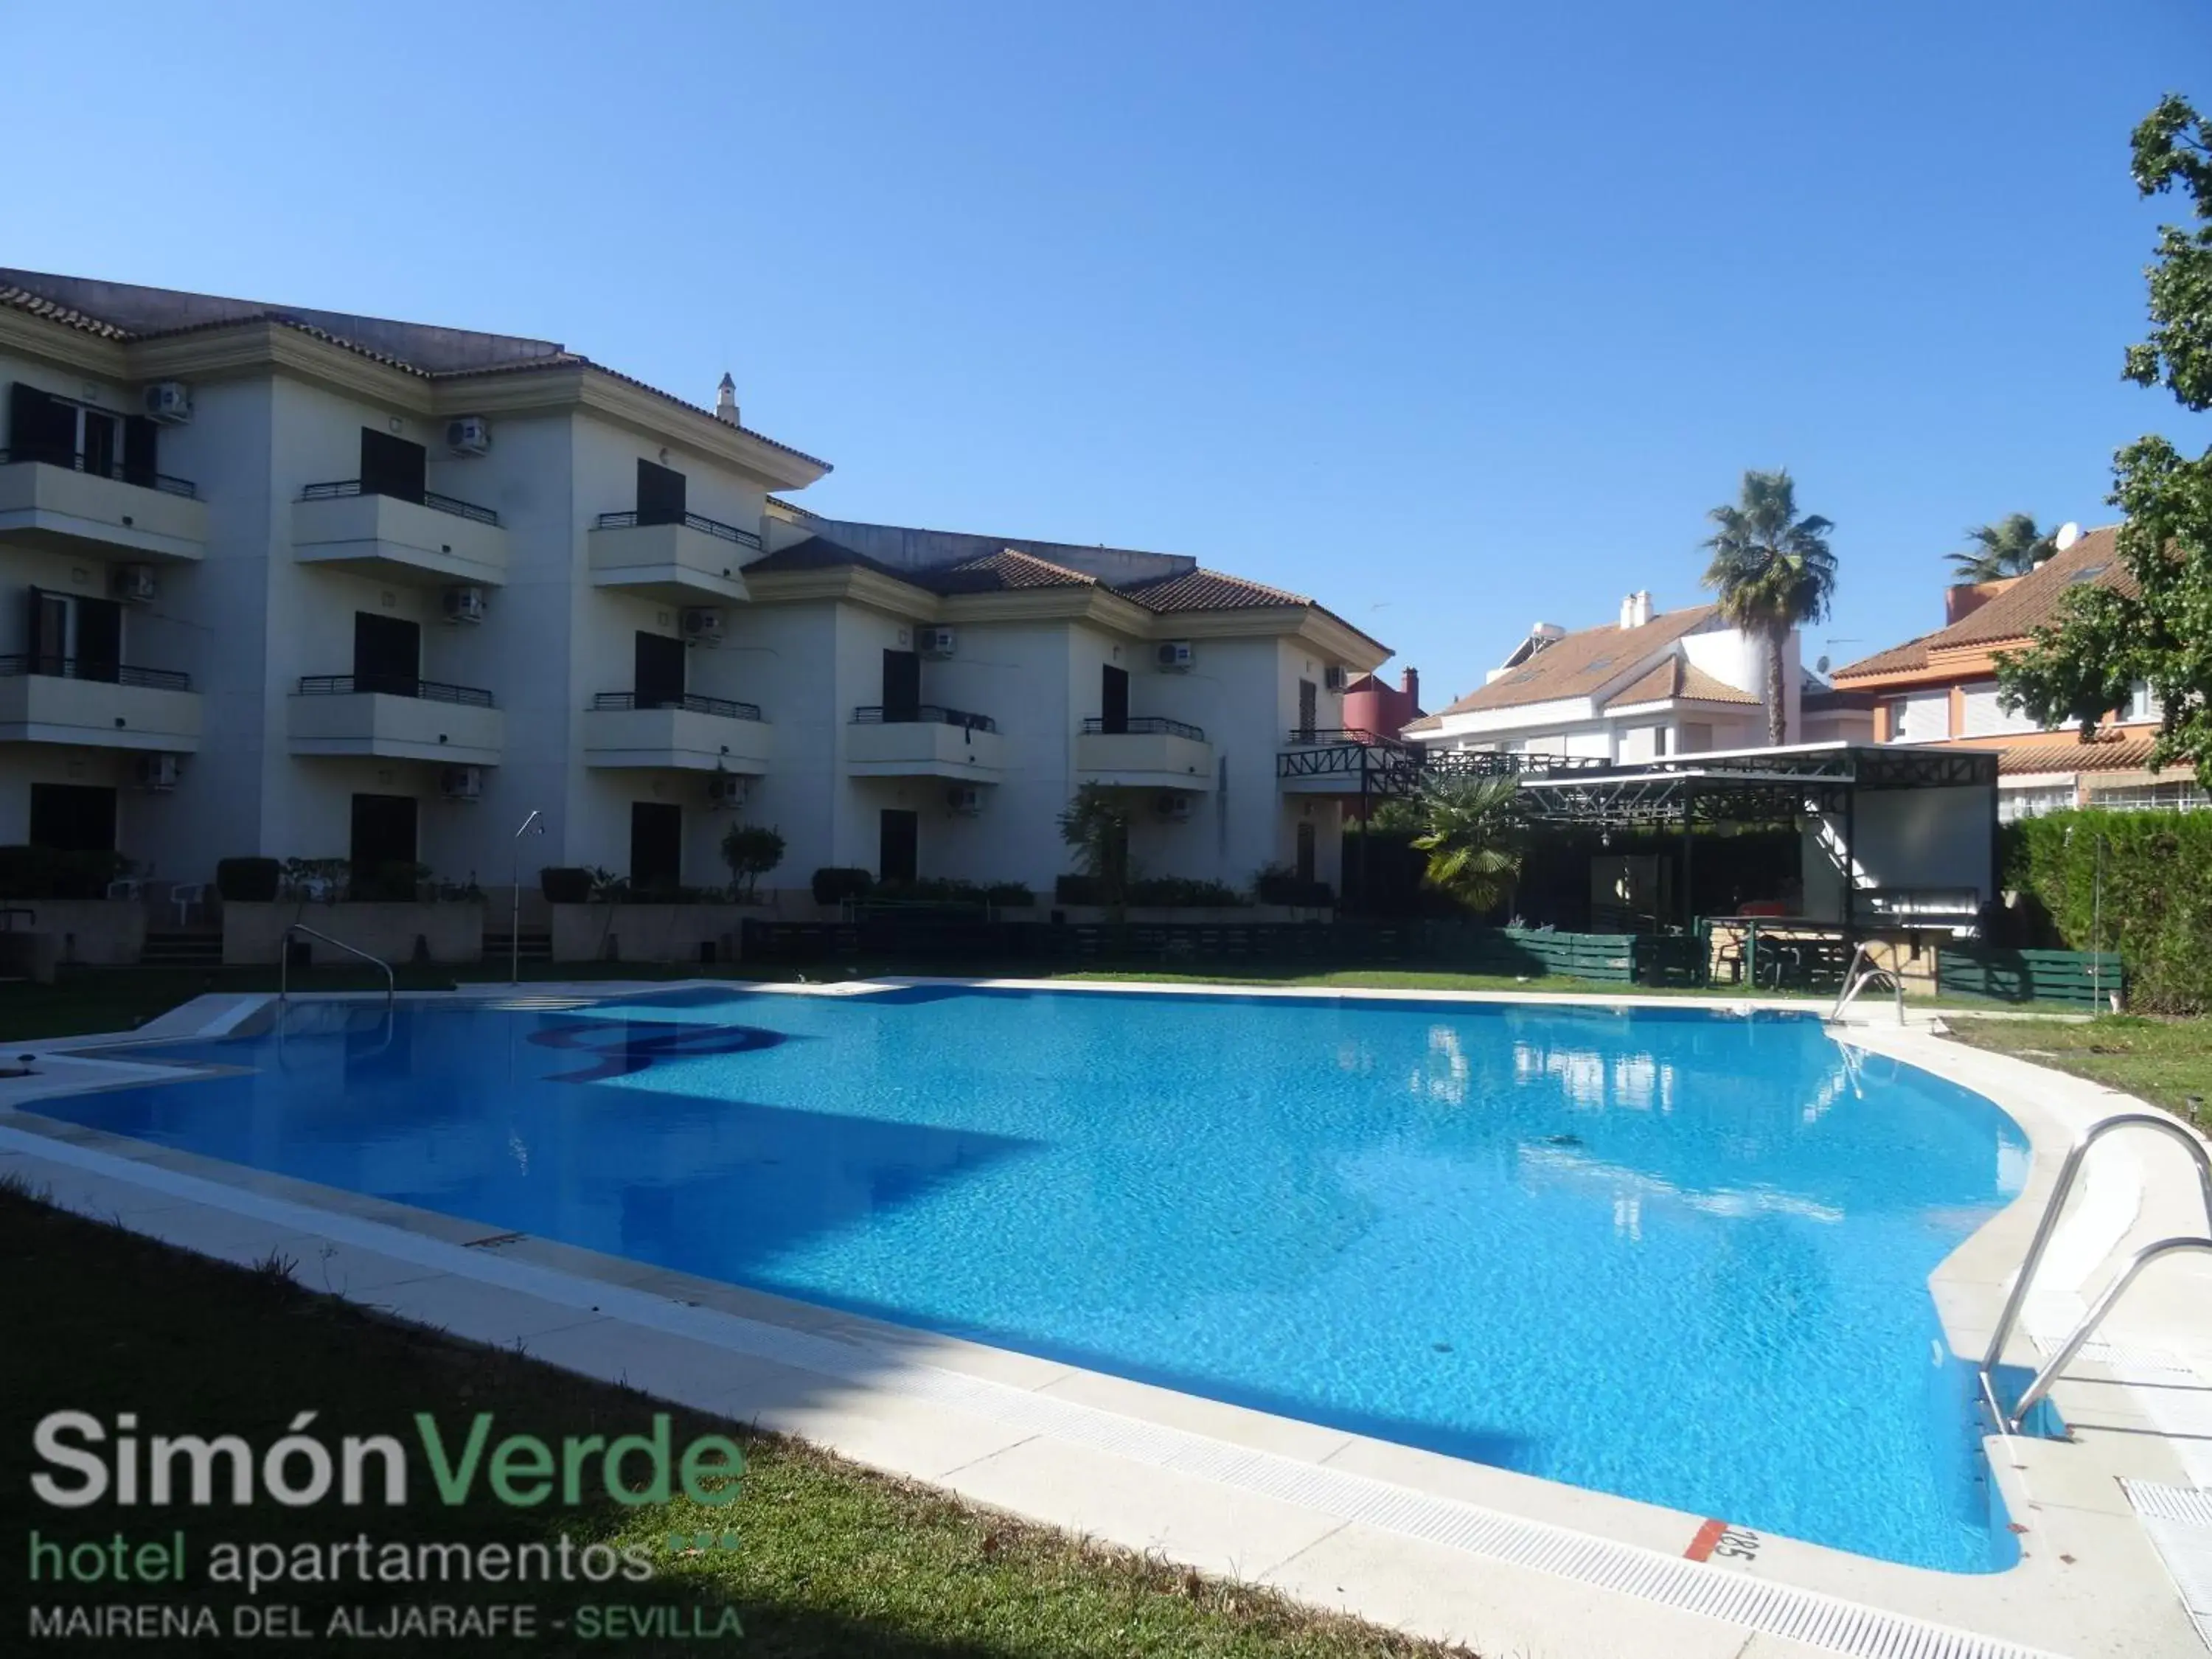 Swimming pool, Property Building in Hospedium Hotel Apartamentos Simón Verde